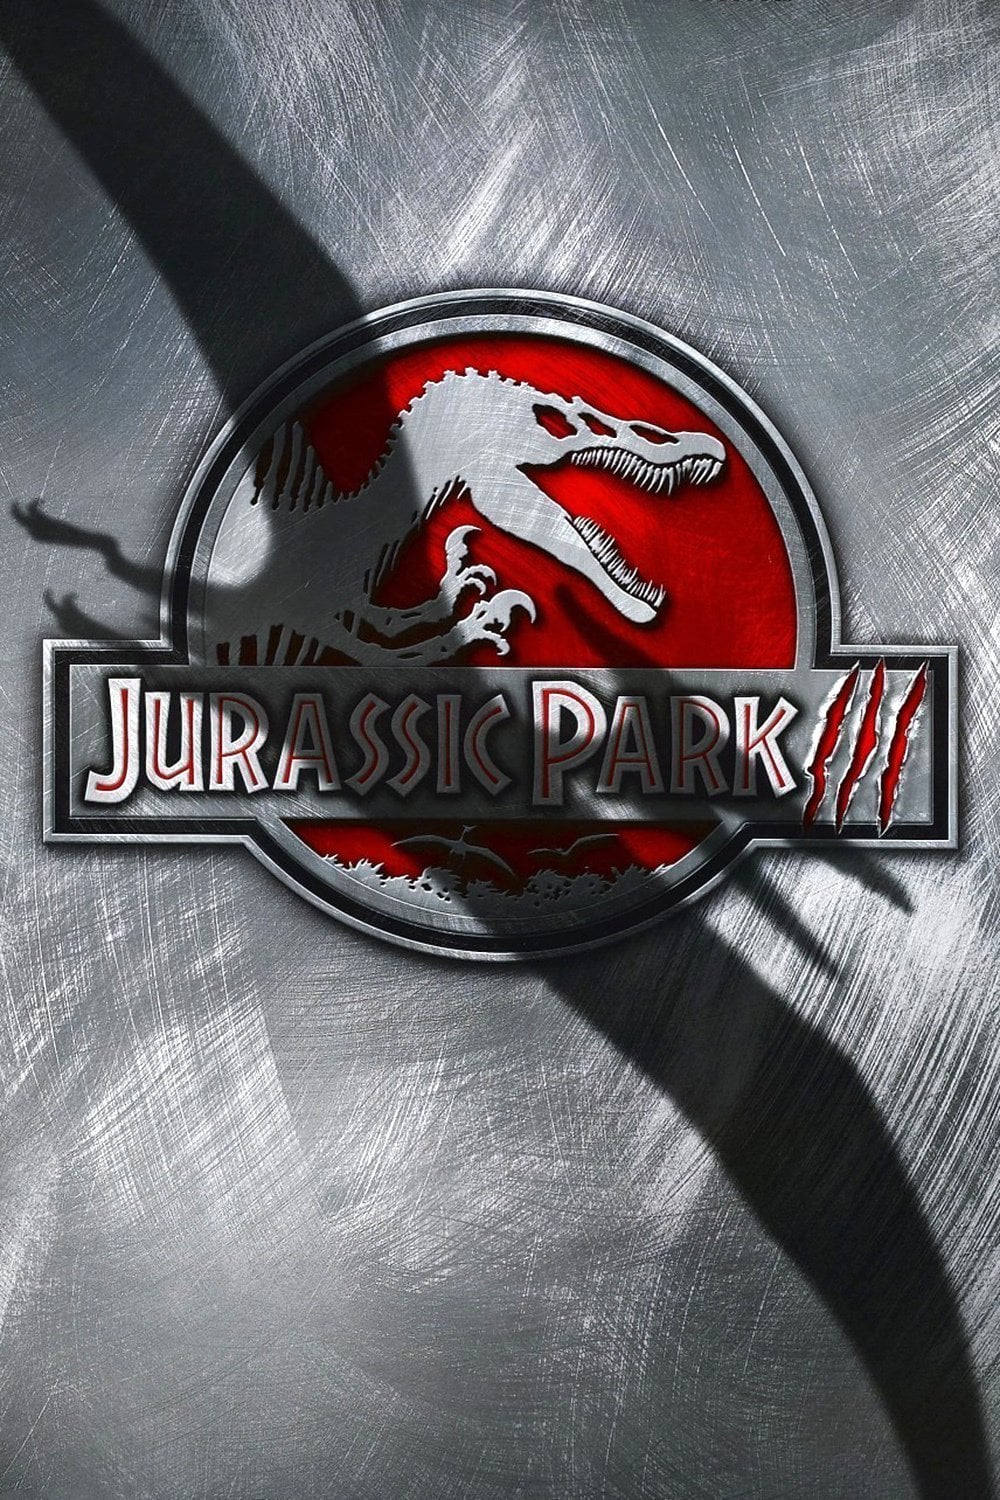 Affiche du film "Jurassic Park III"